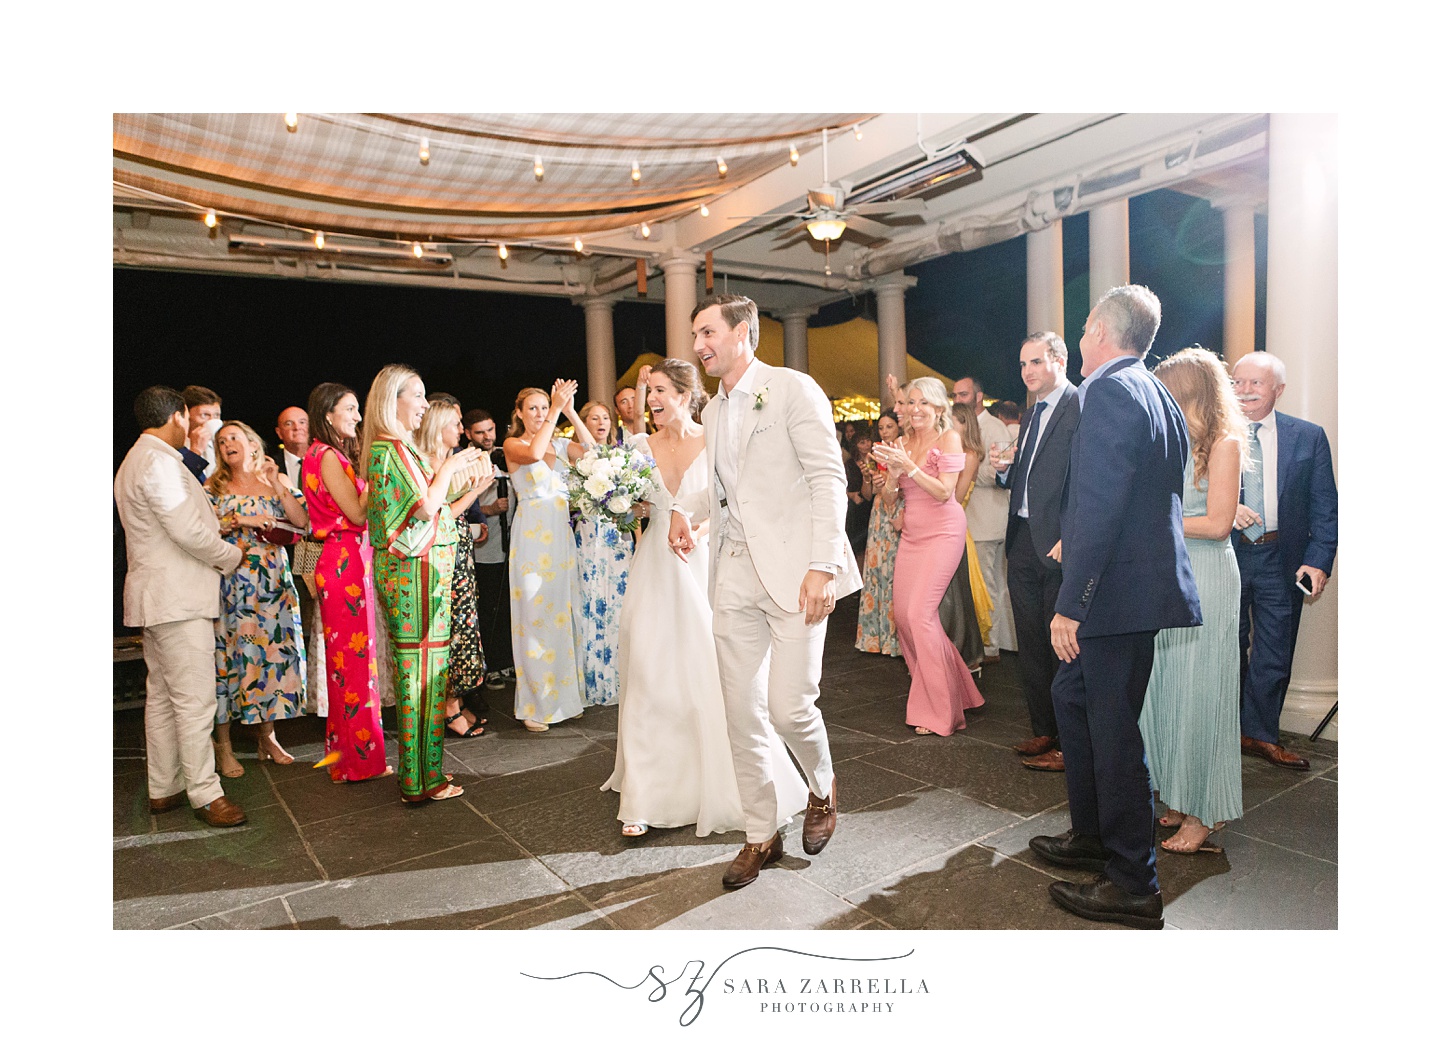 newlyweds walk onto dance floor during Newport RI wedding reception